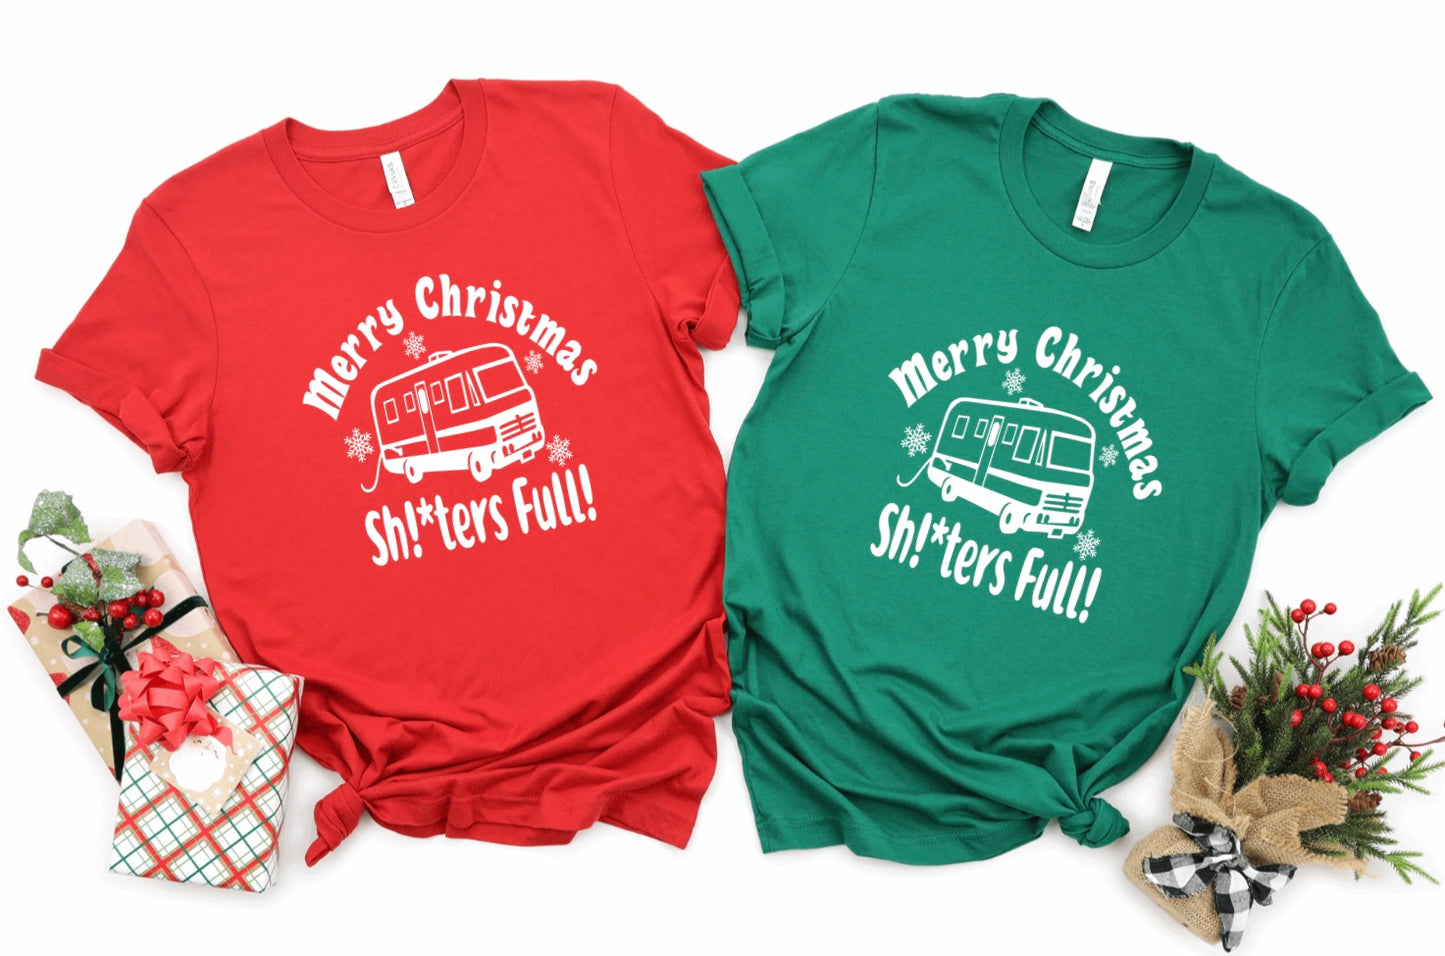 Merry Christmas shitters full t-shirt 